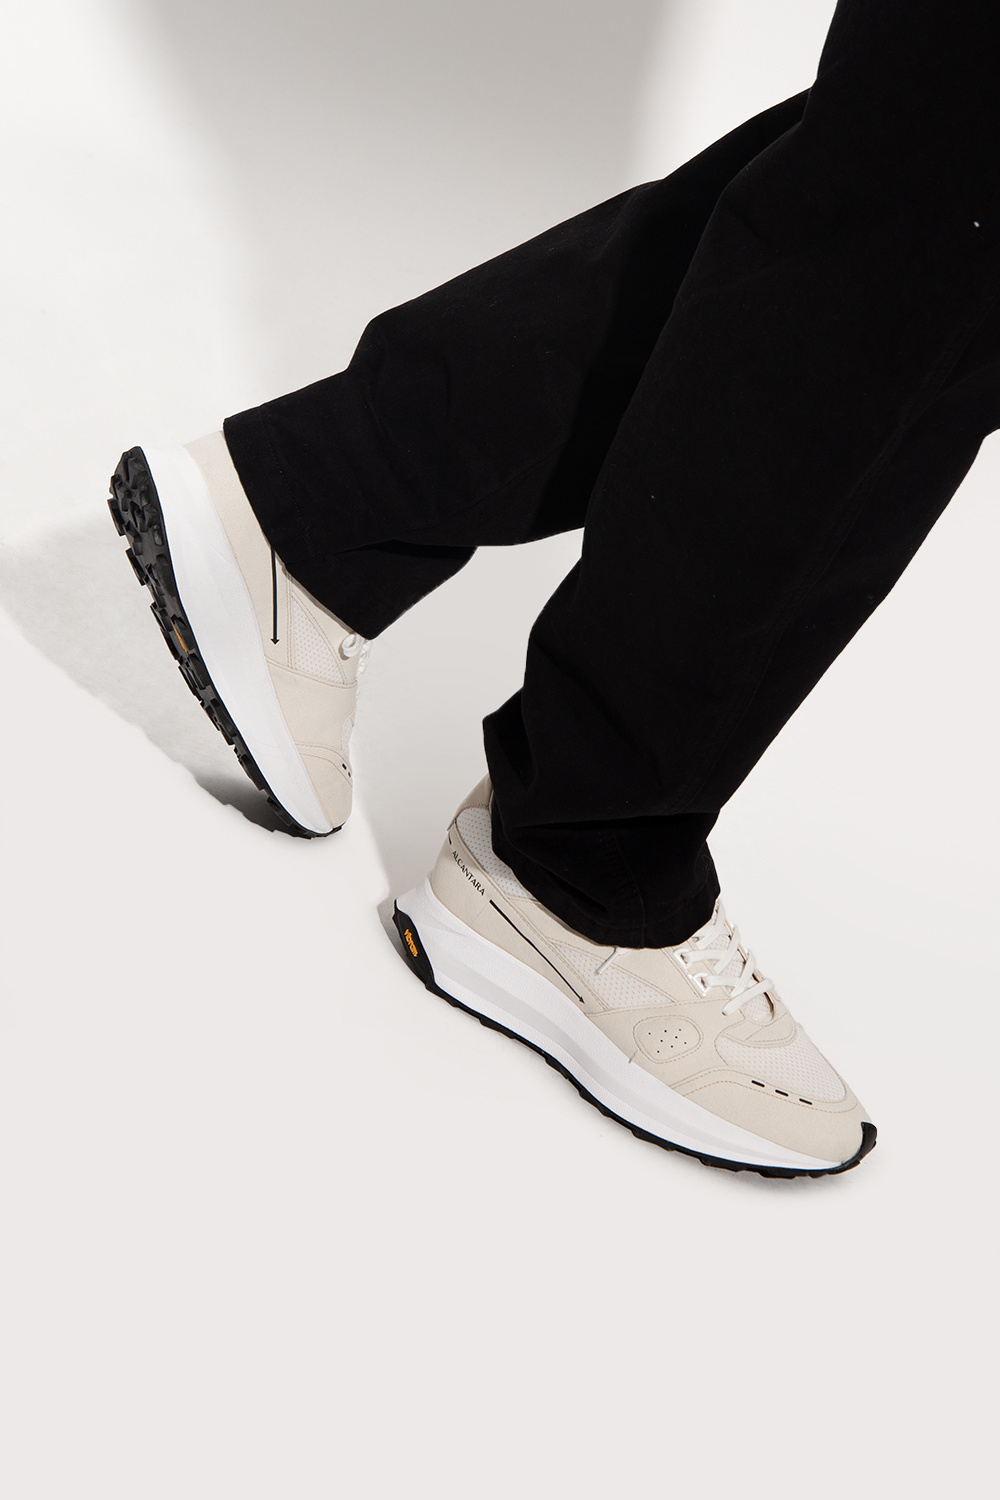 Mercer Amsterdam ‘Racer Lux’ sneakers | Men's Shoes | Vitkac